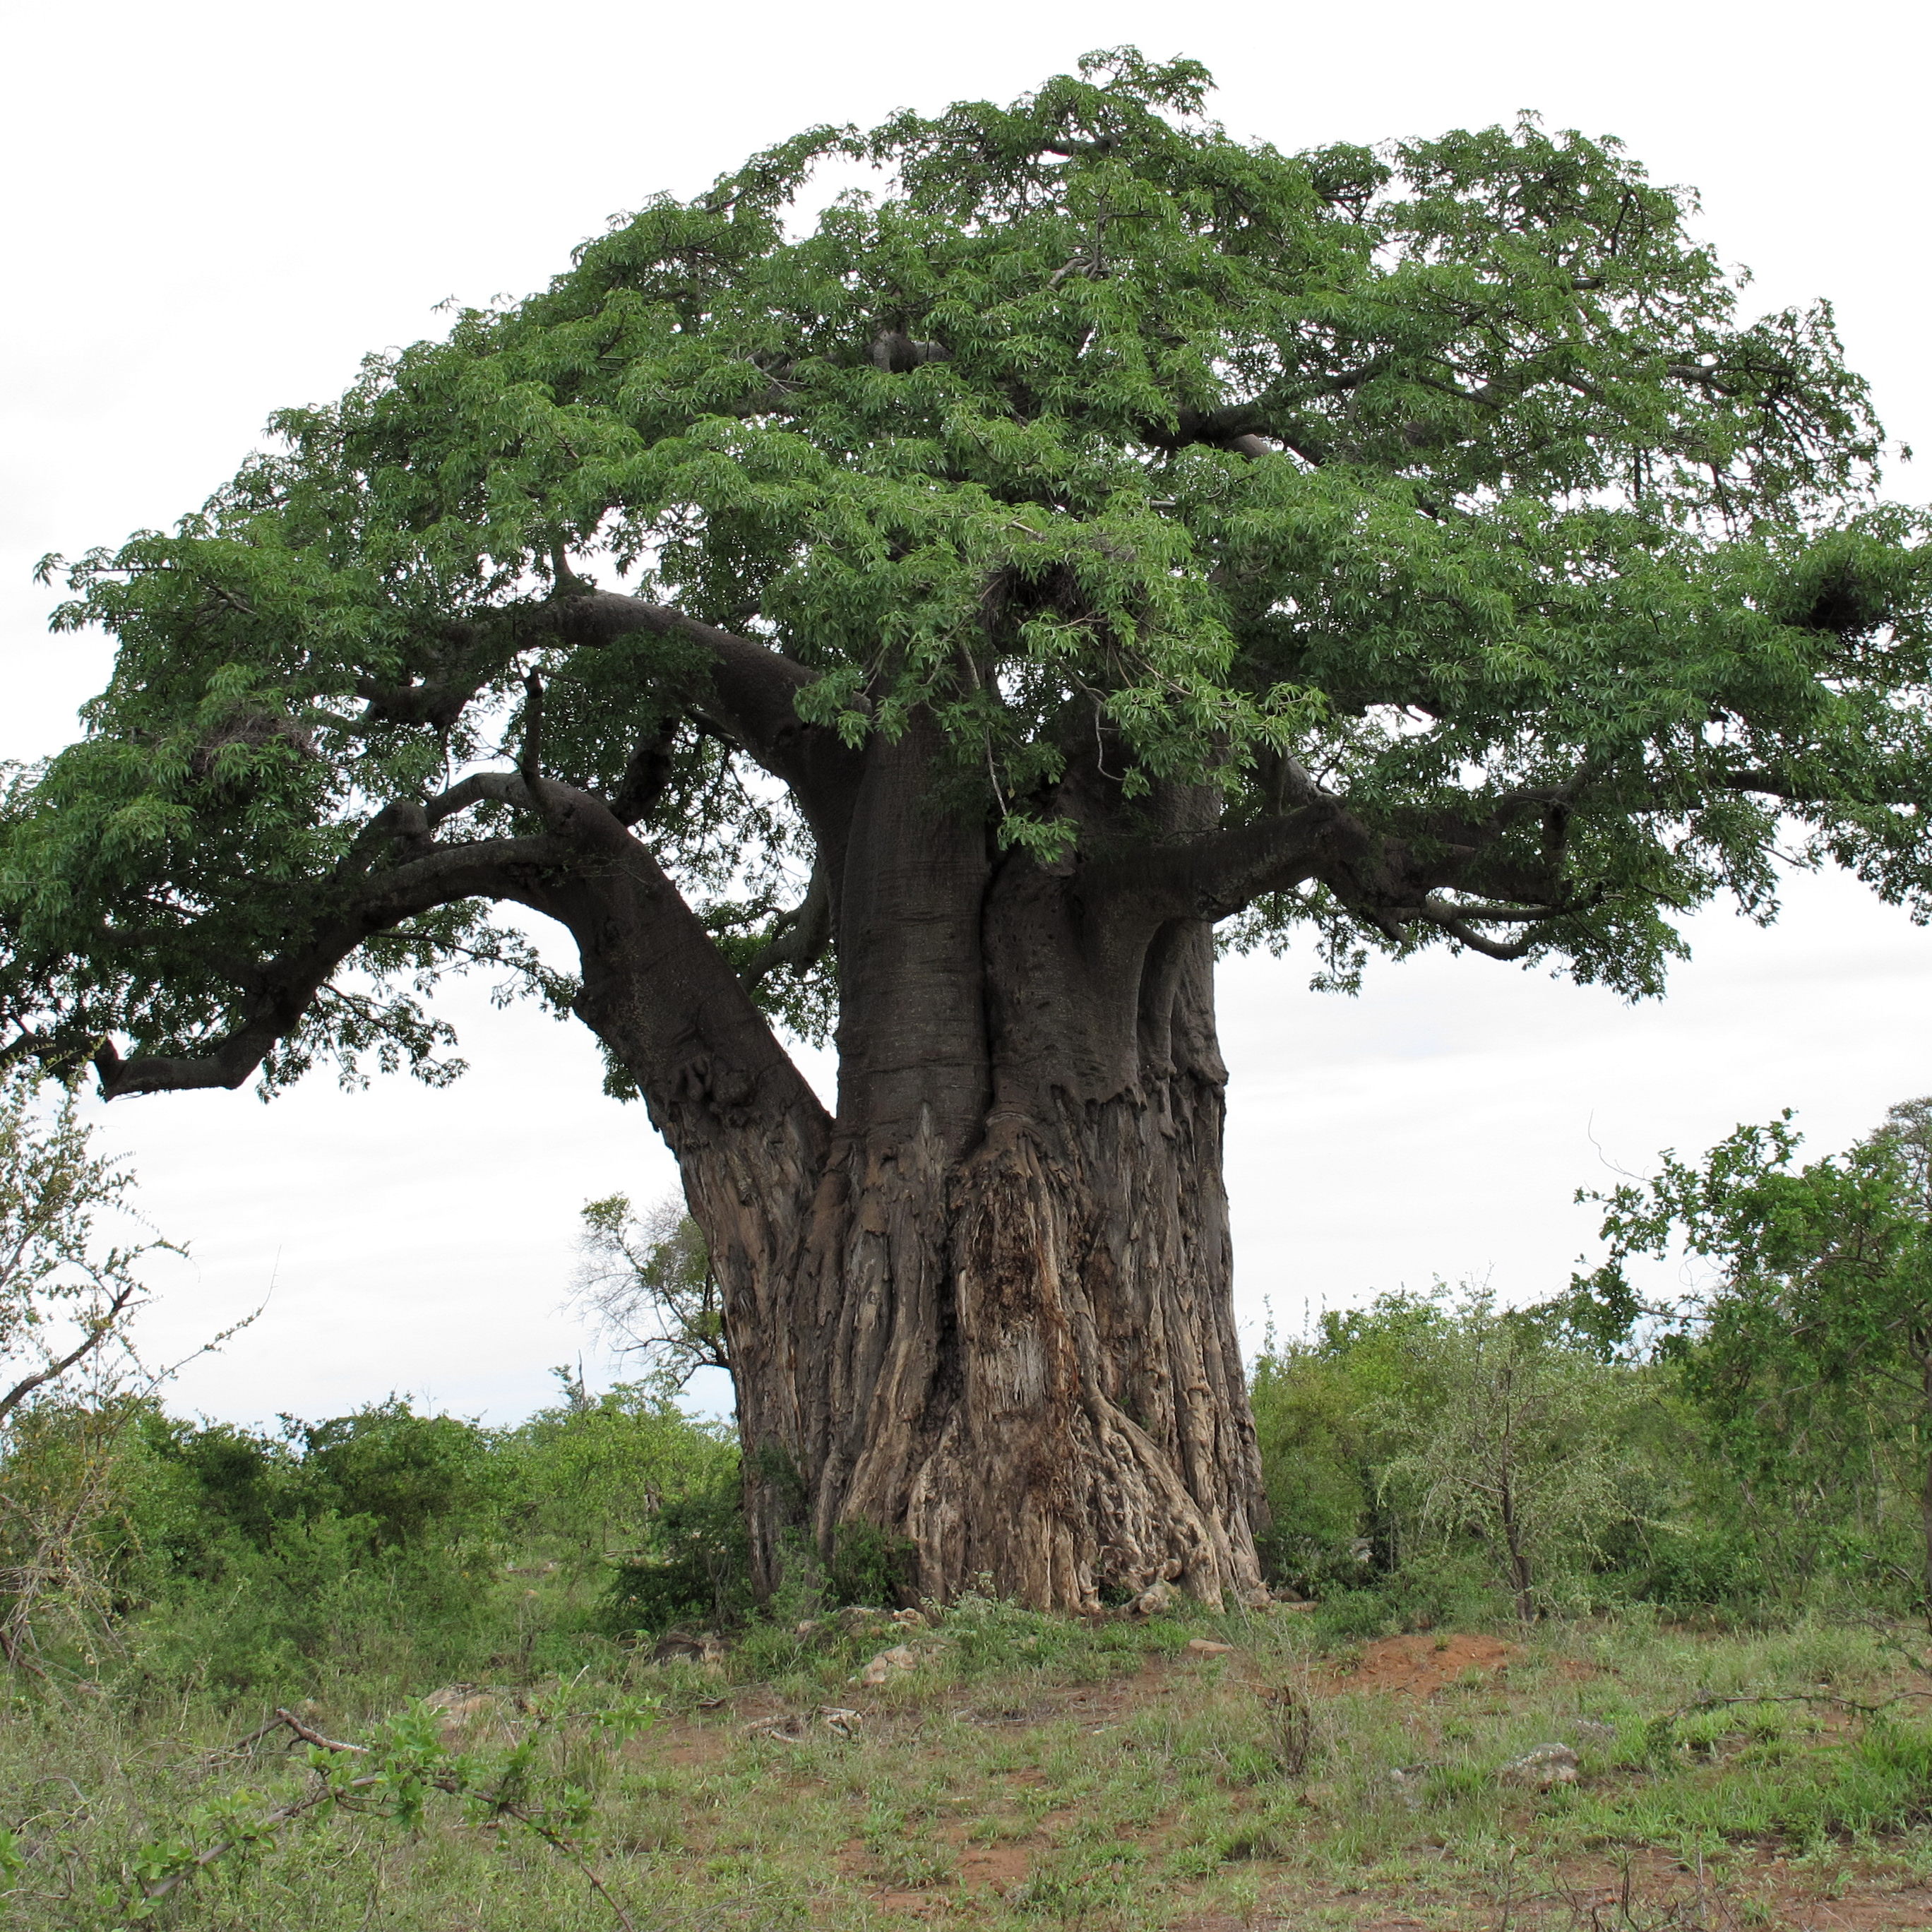 Баобаб википедия. Дерево в Африке баобаб. Баобаб ЮАР. Баобаб крона. Баобаб в саванне.